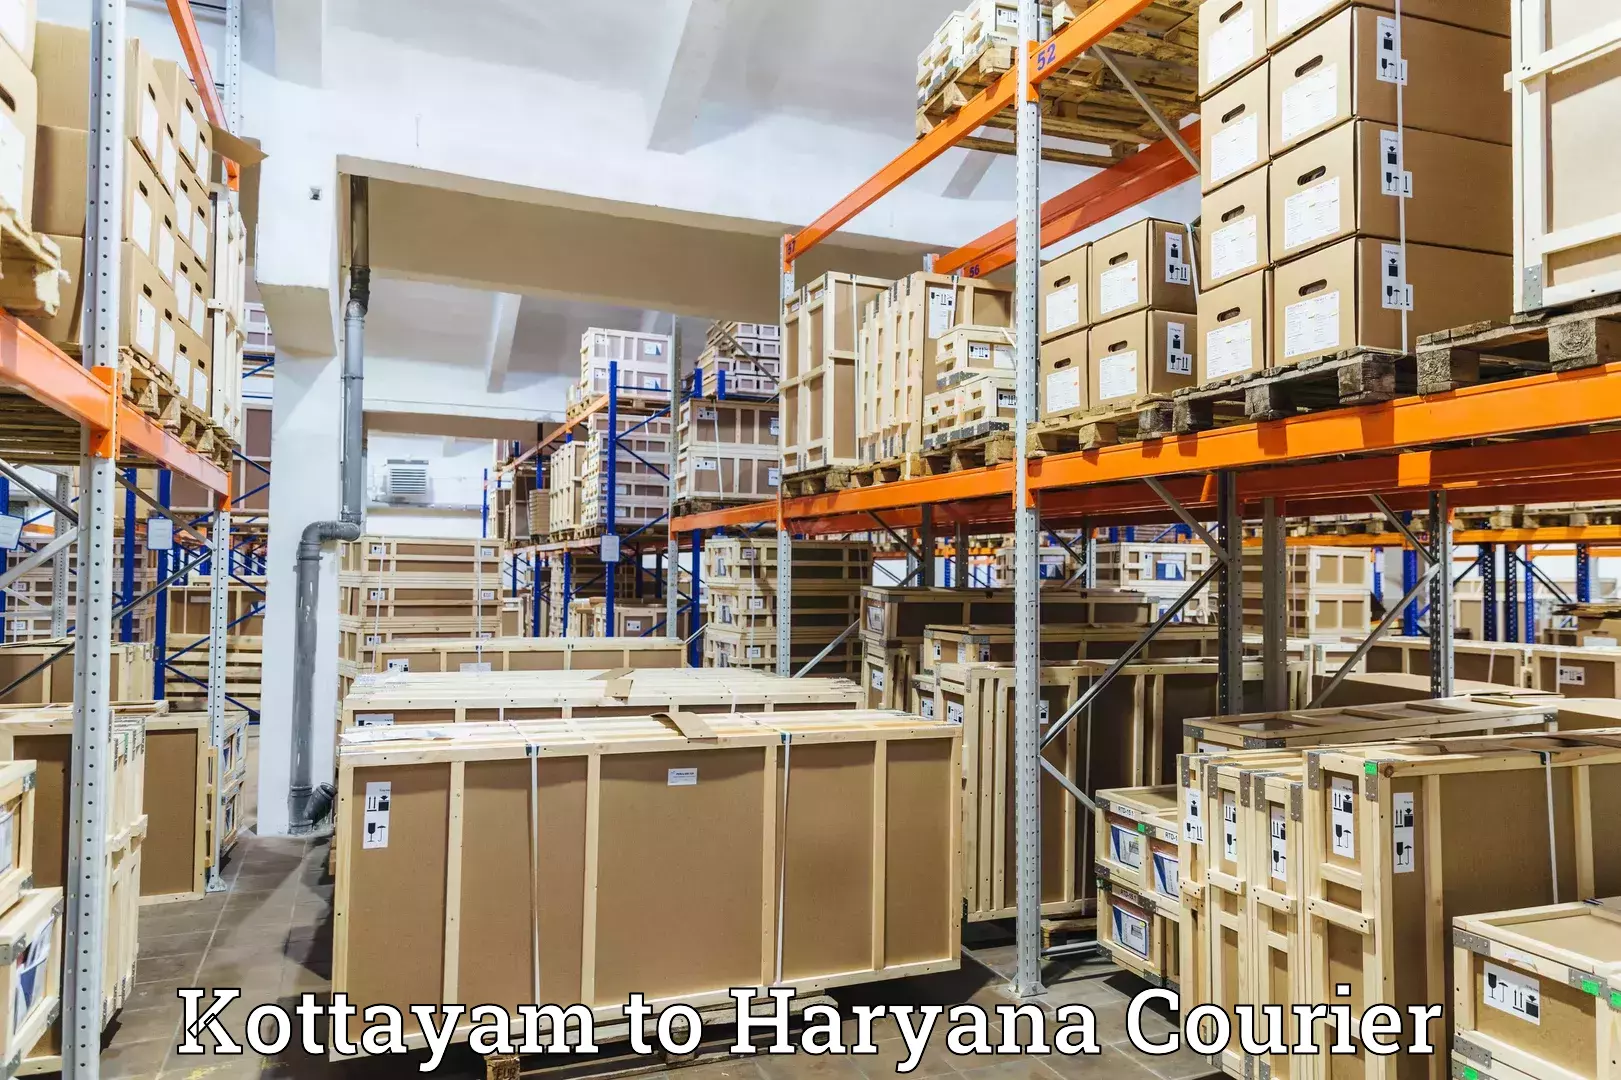 Courier service comparison Kottayam to Haryana